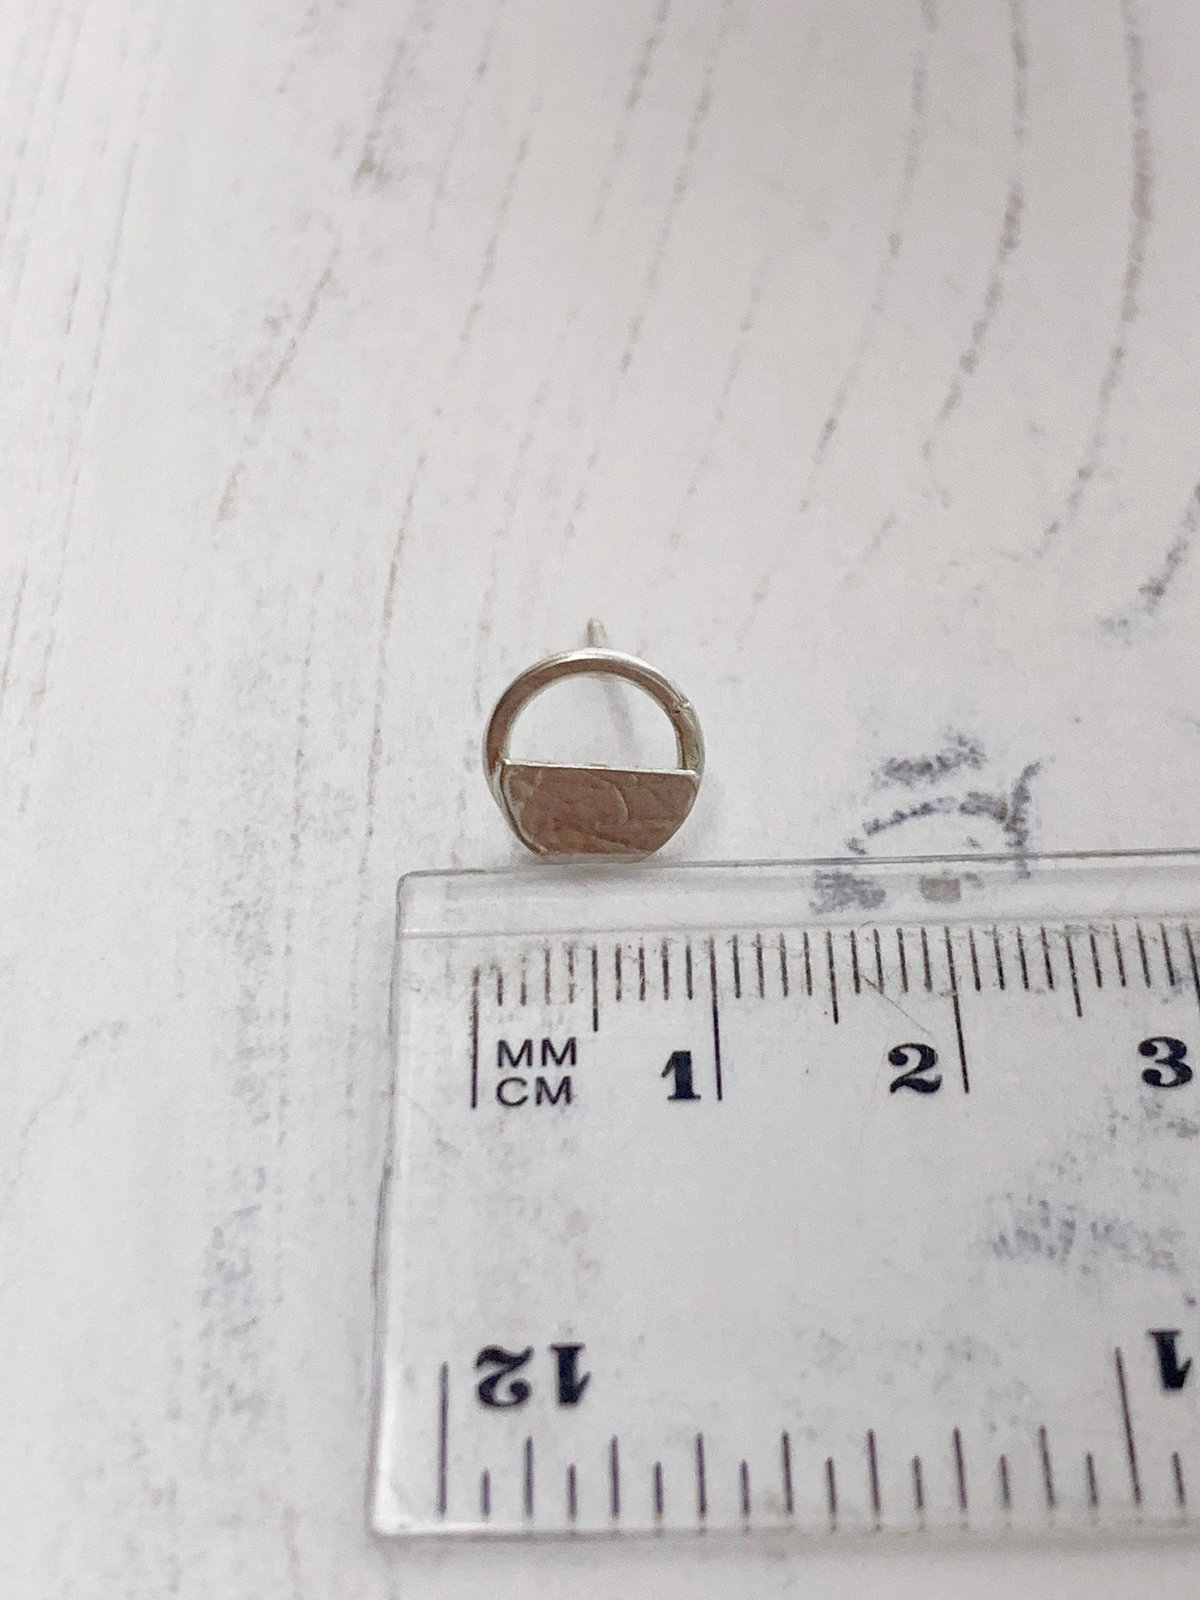 Image of Circle and semi circle stud earrings 